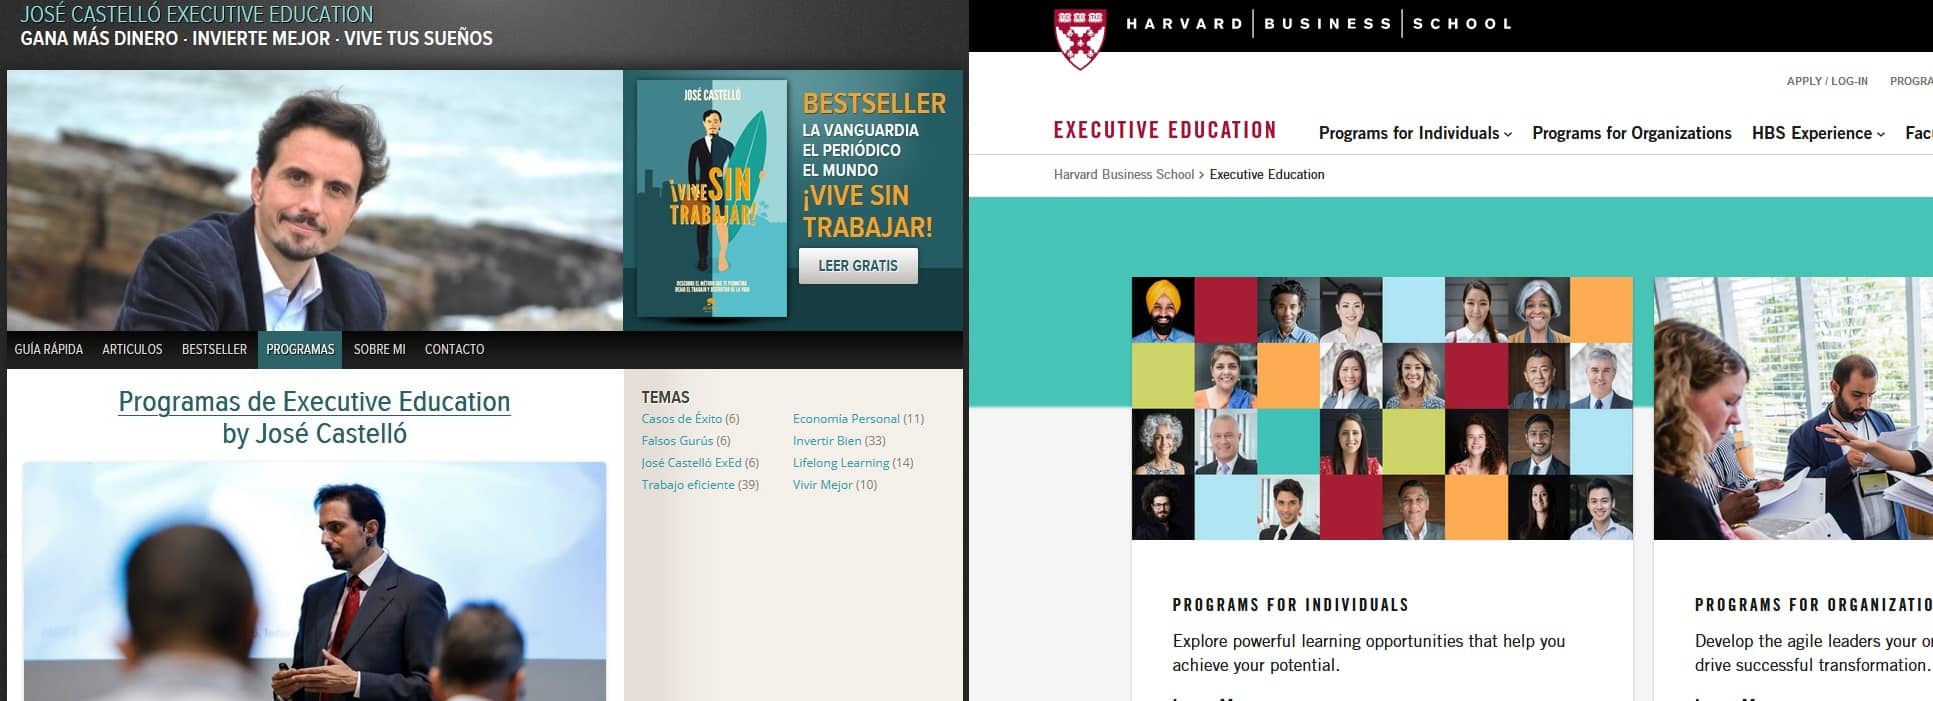 jose castello harvard business school executive education